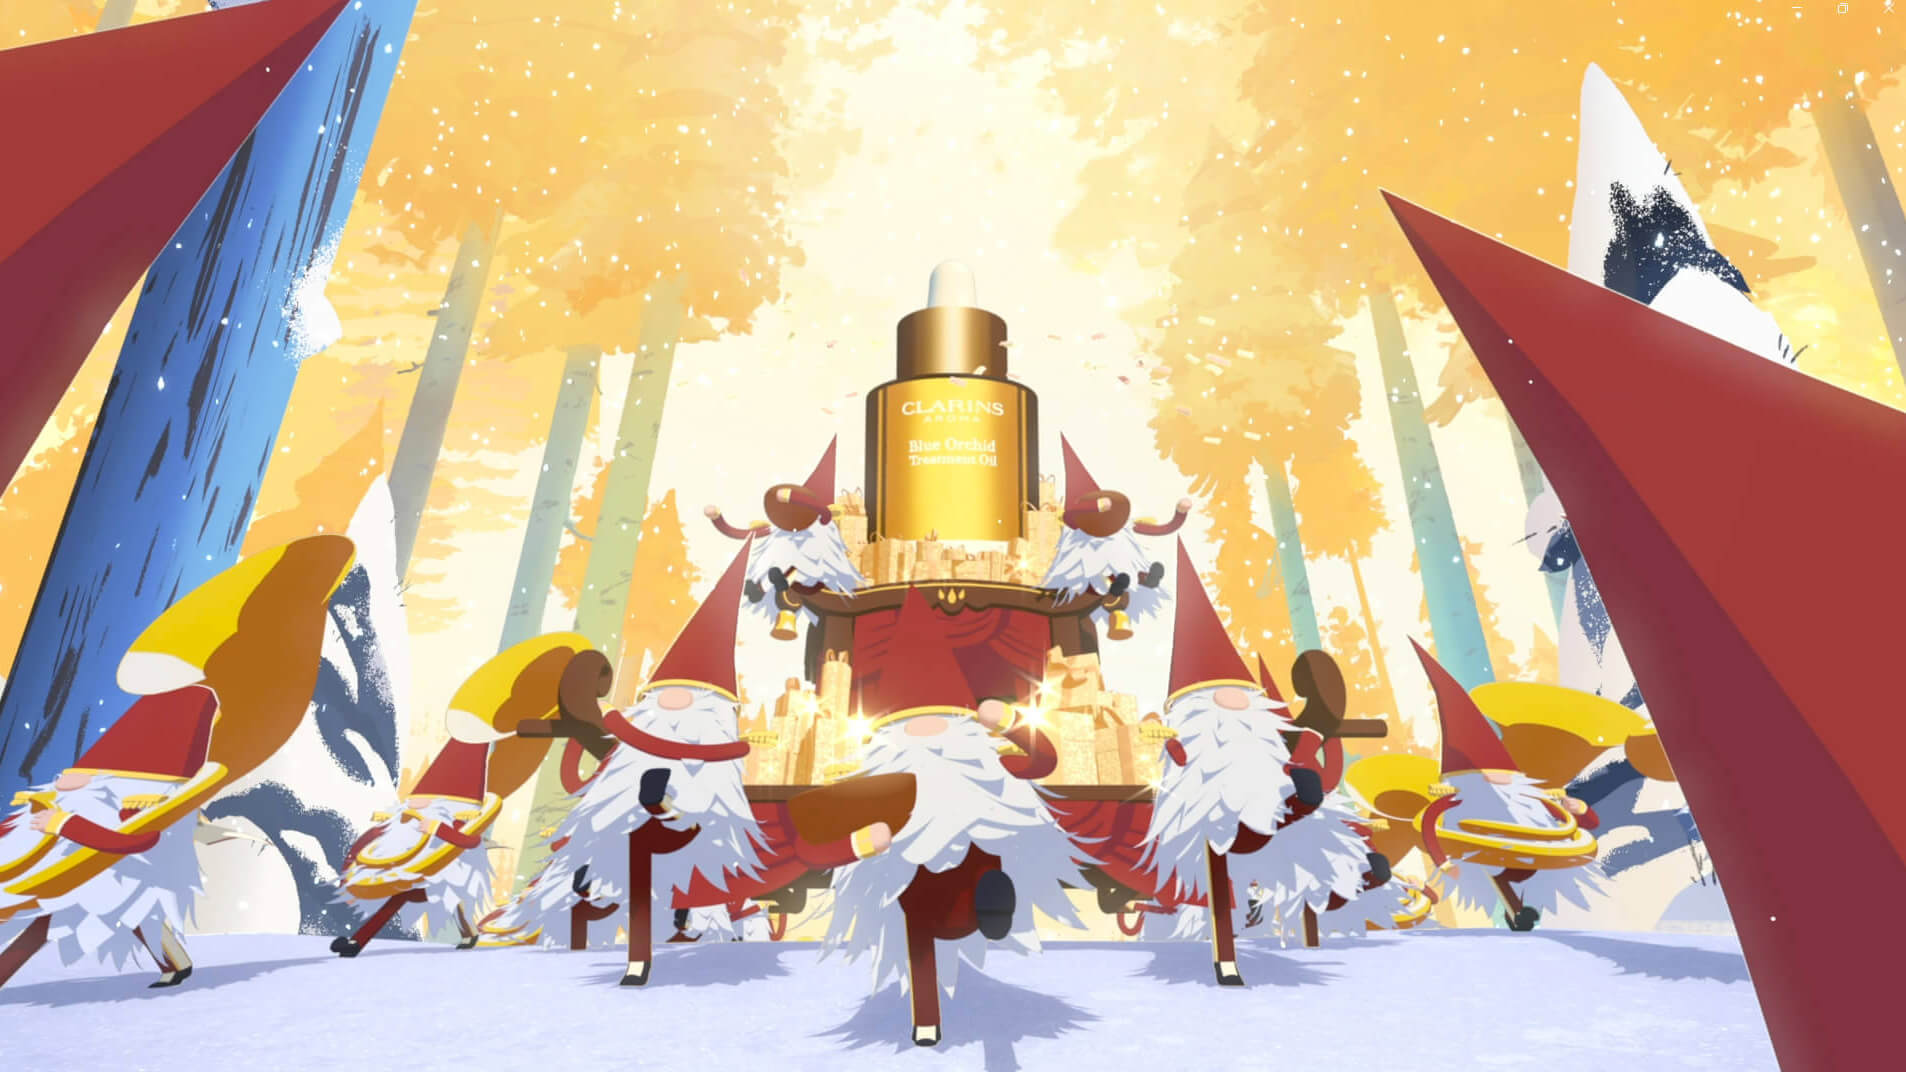 Christmas movie illustration with pause on parading christmas elfs